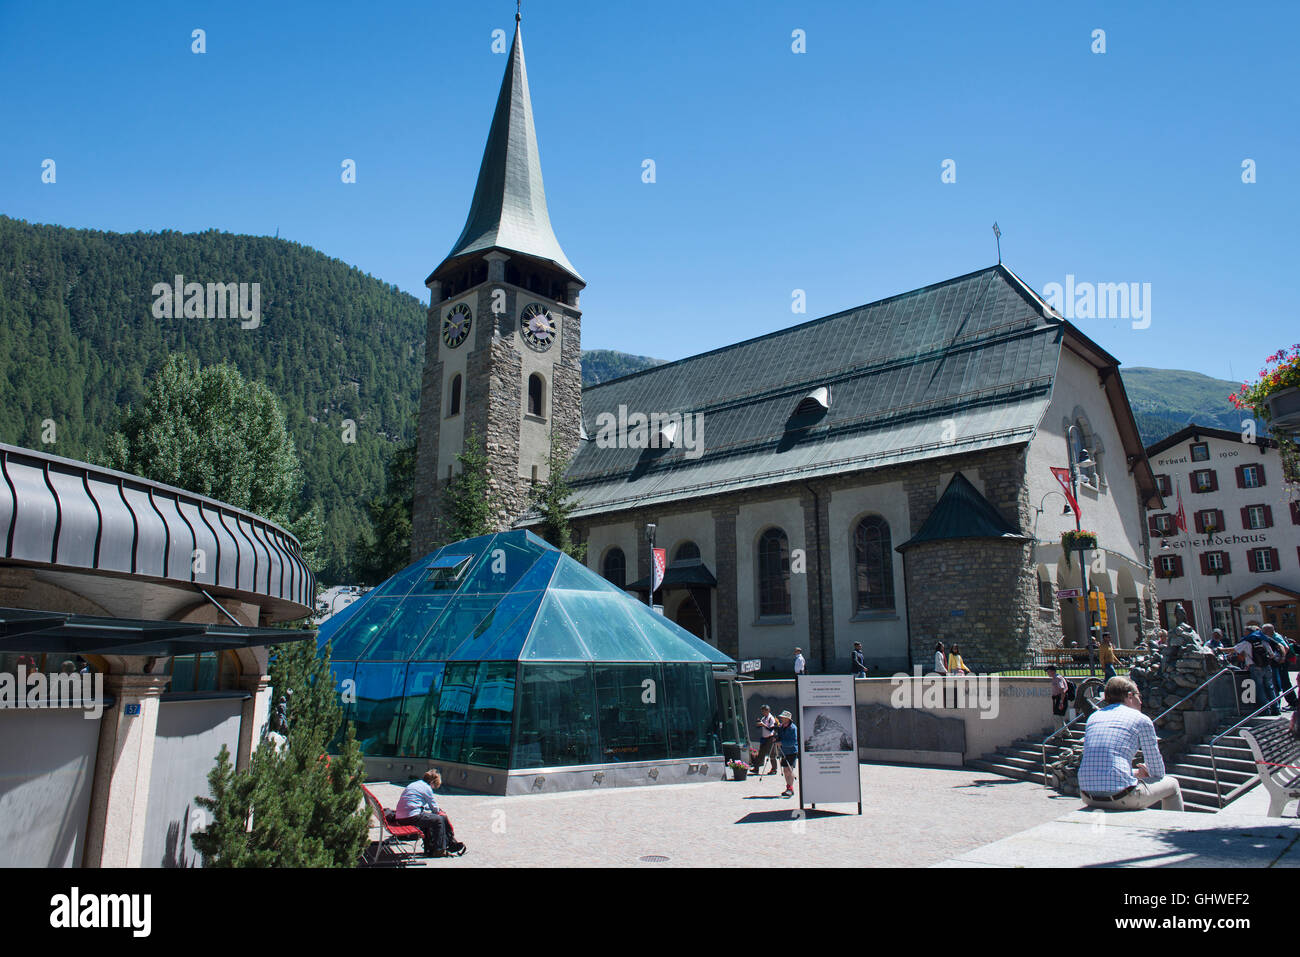 The Matterhorn Museum and church in the center of Zermatt, Switzerland Stock Photo